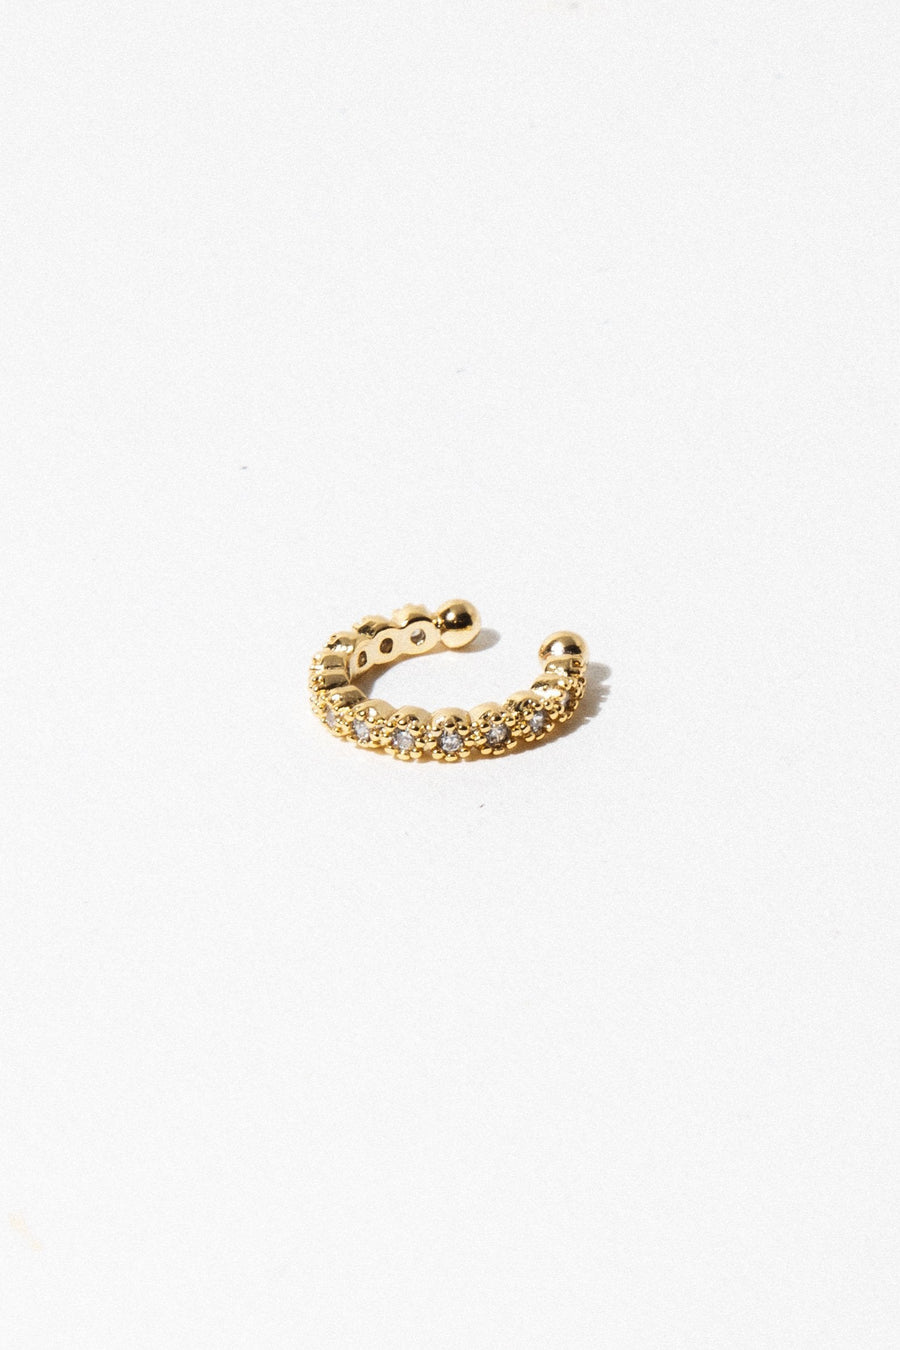 Aimvogue Jewelry Gold Circle Diamondette Ear Cuff